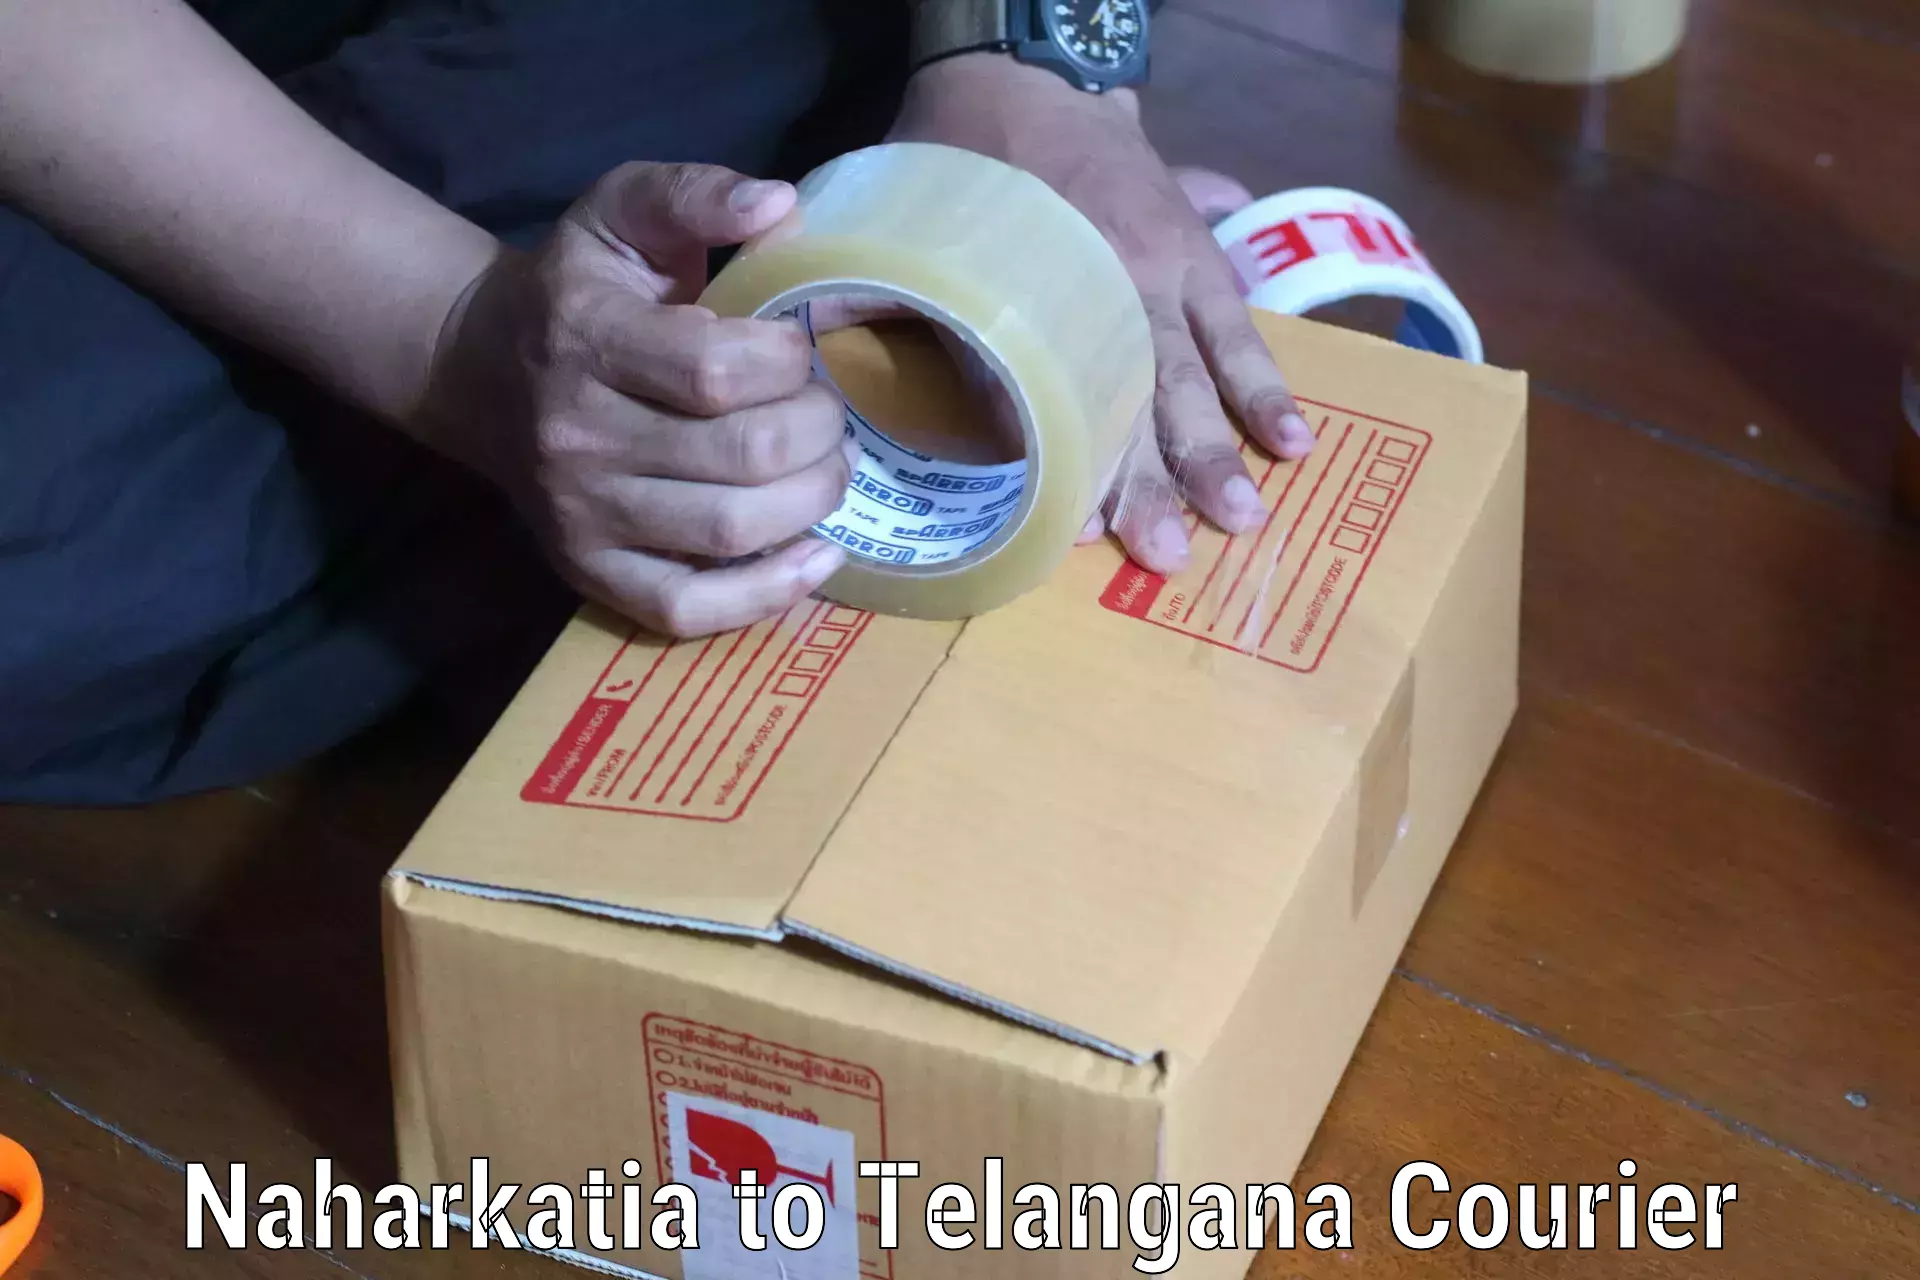 Courier services in Naharkatia to Devarakonda